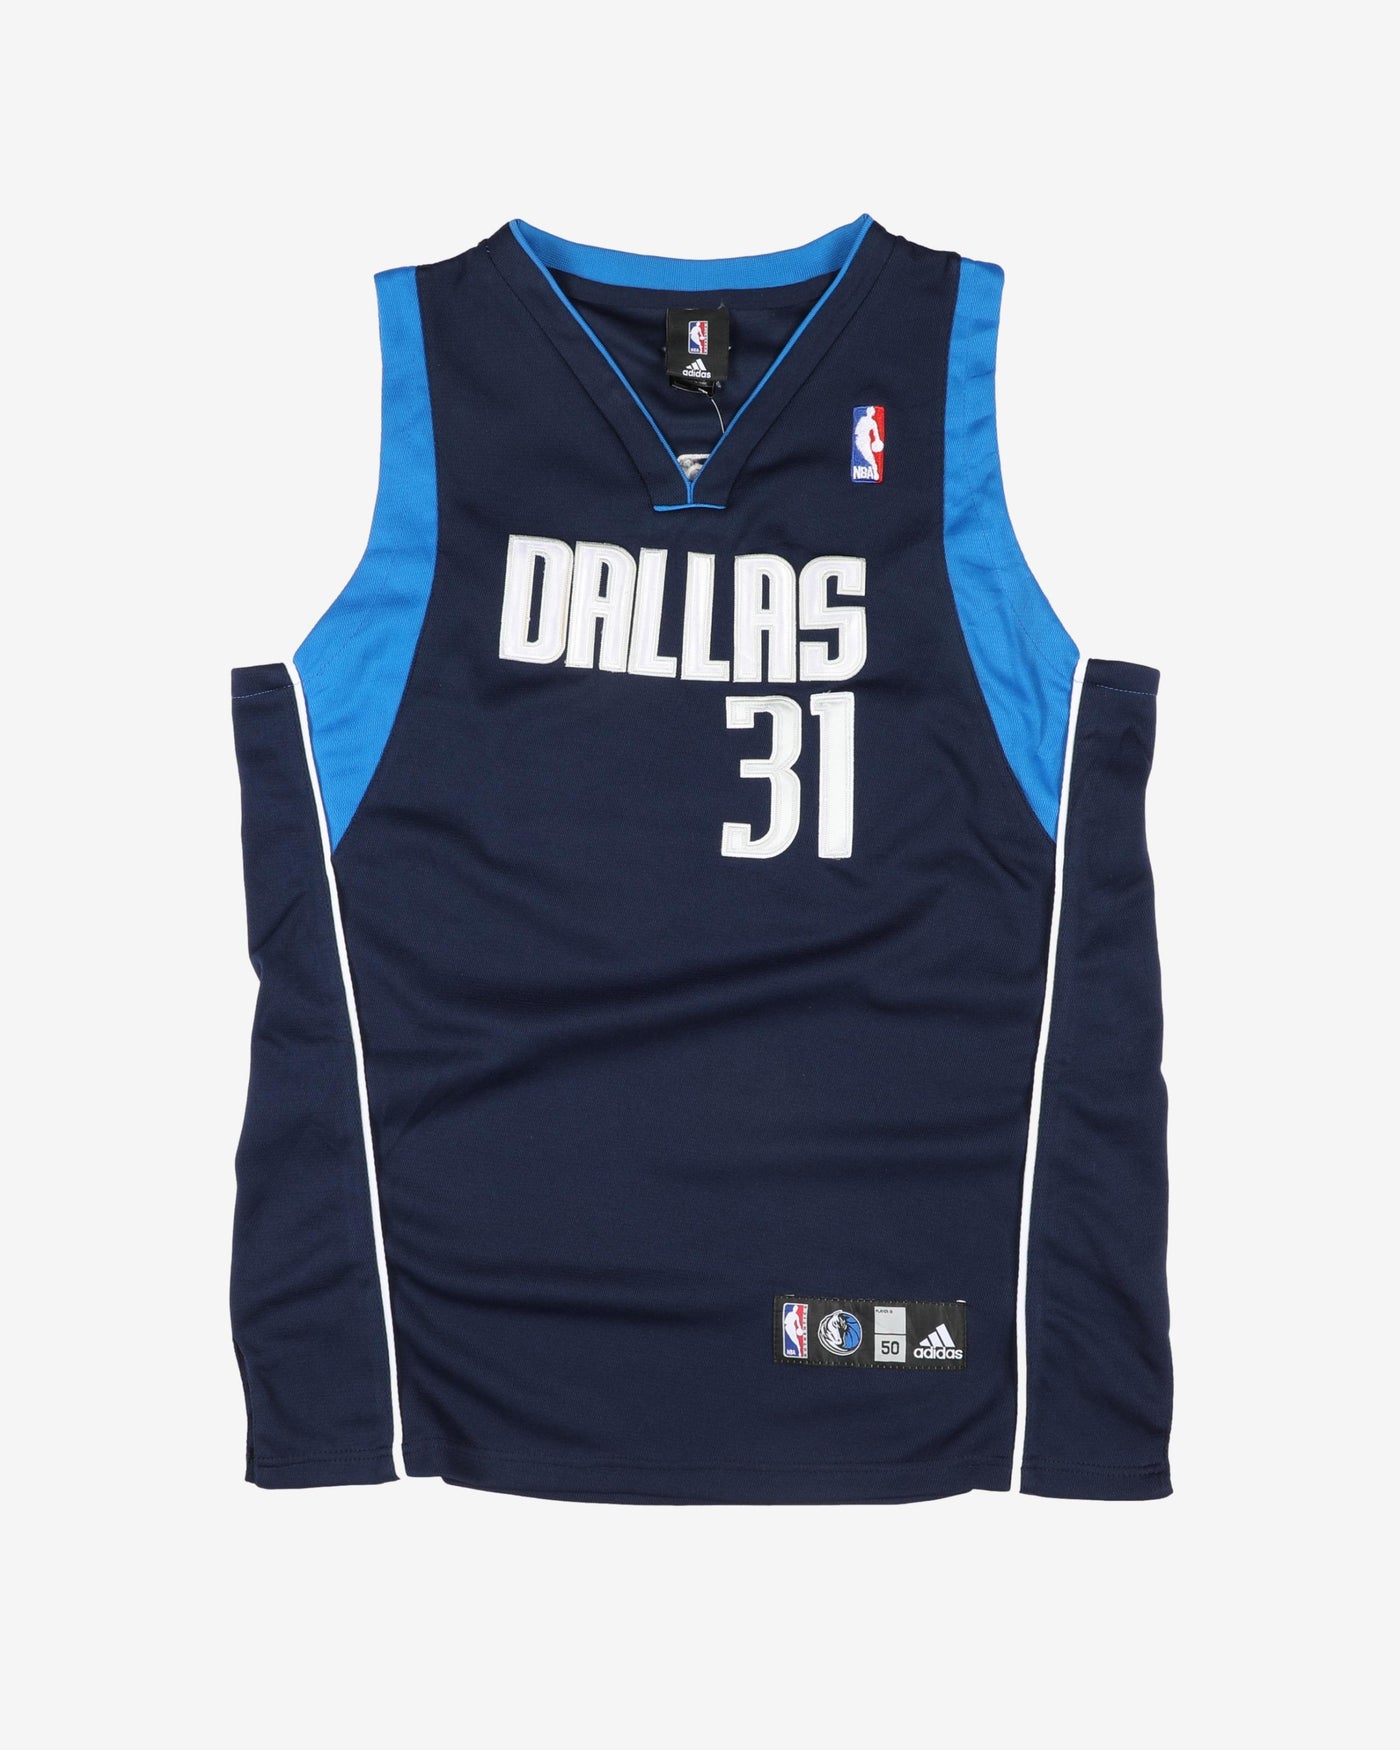 Jason Terry #31 Dallas Mavericks NBA Adidas Jersey - XL